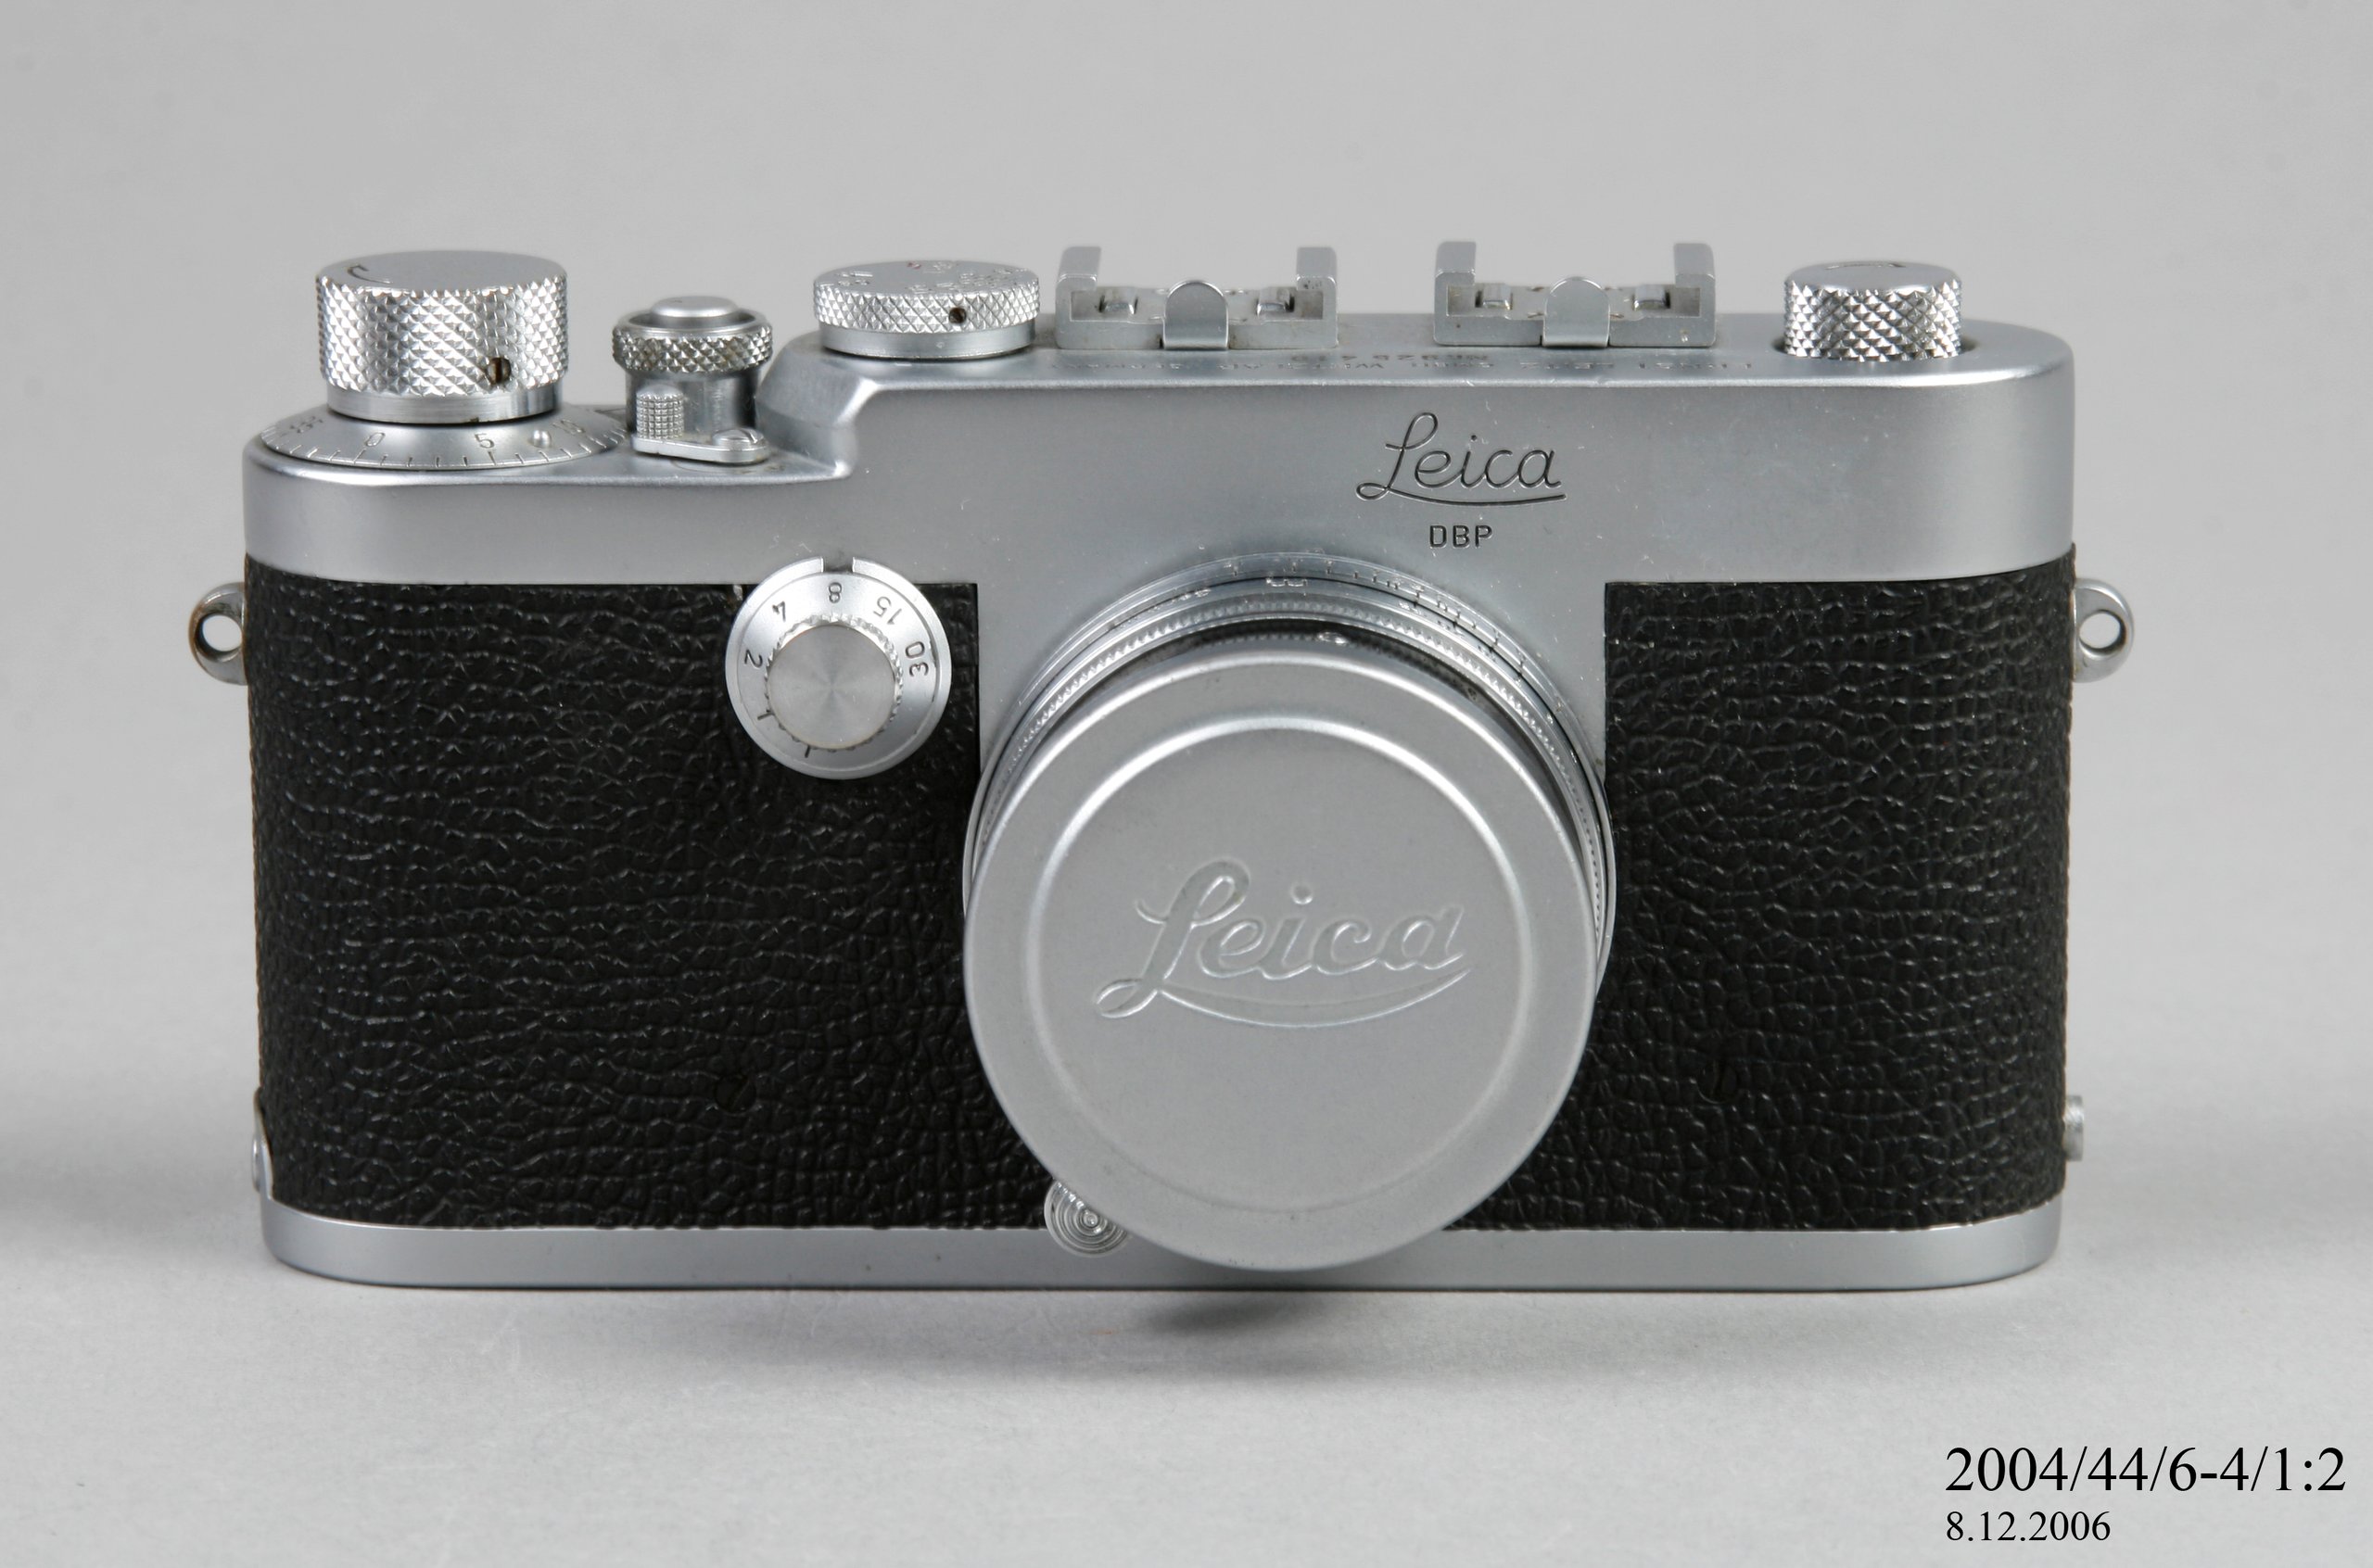 A Leica 1.G. camera made by Ernst Leitz